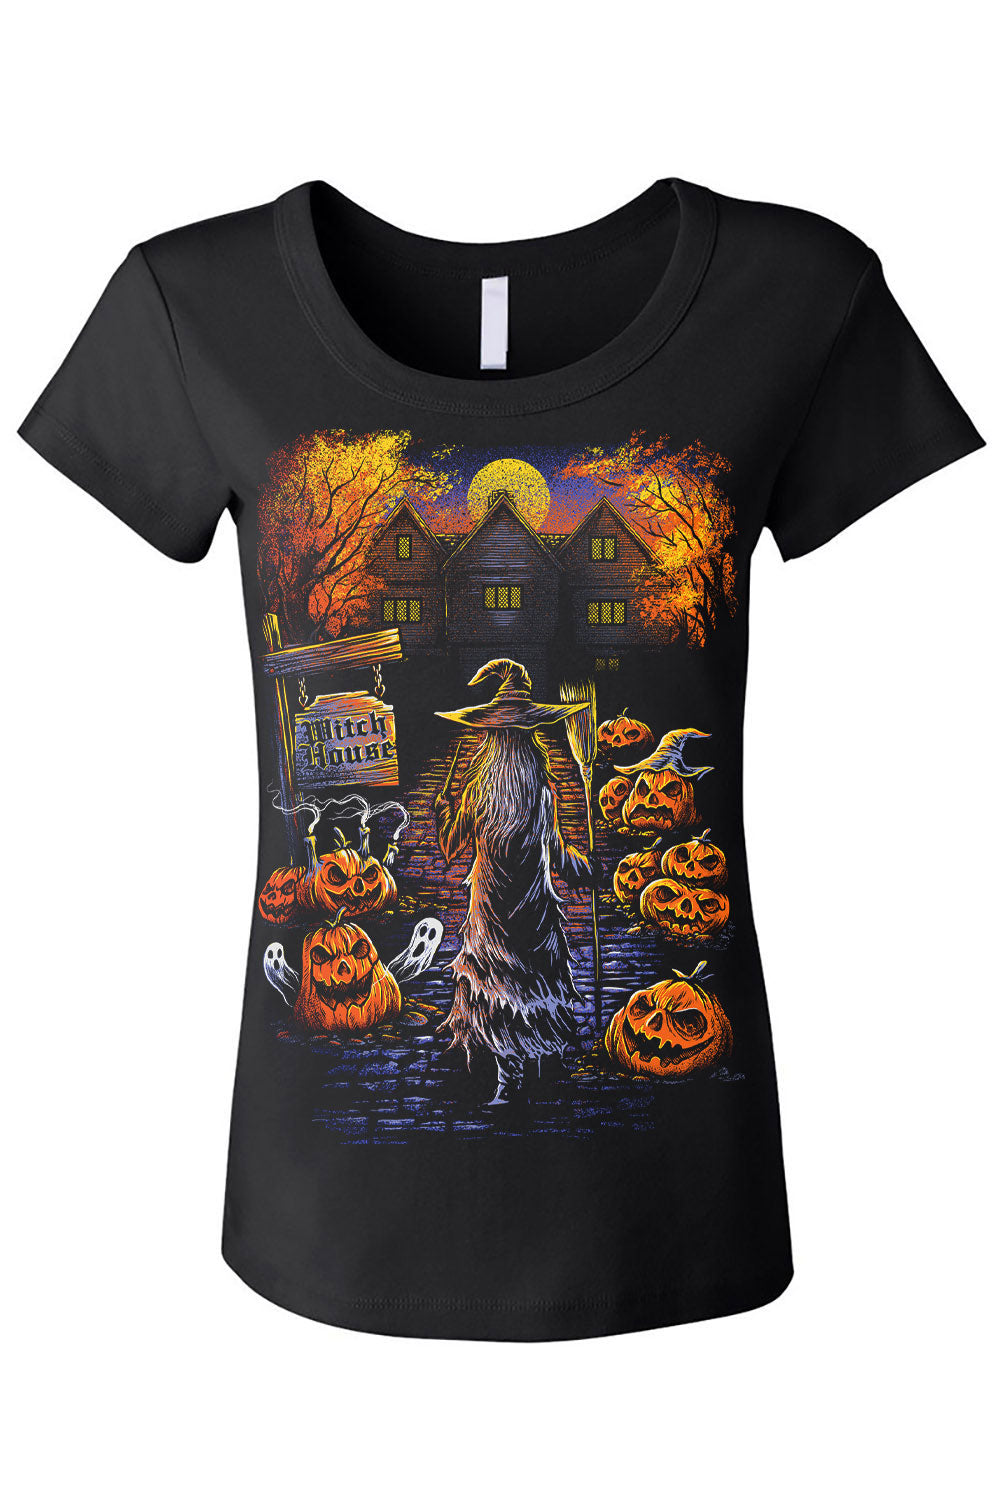 gothic salem witch tshirt for women